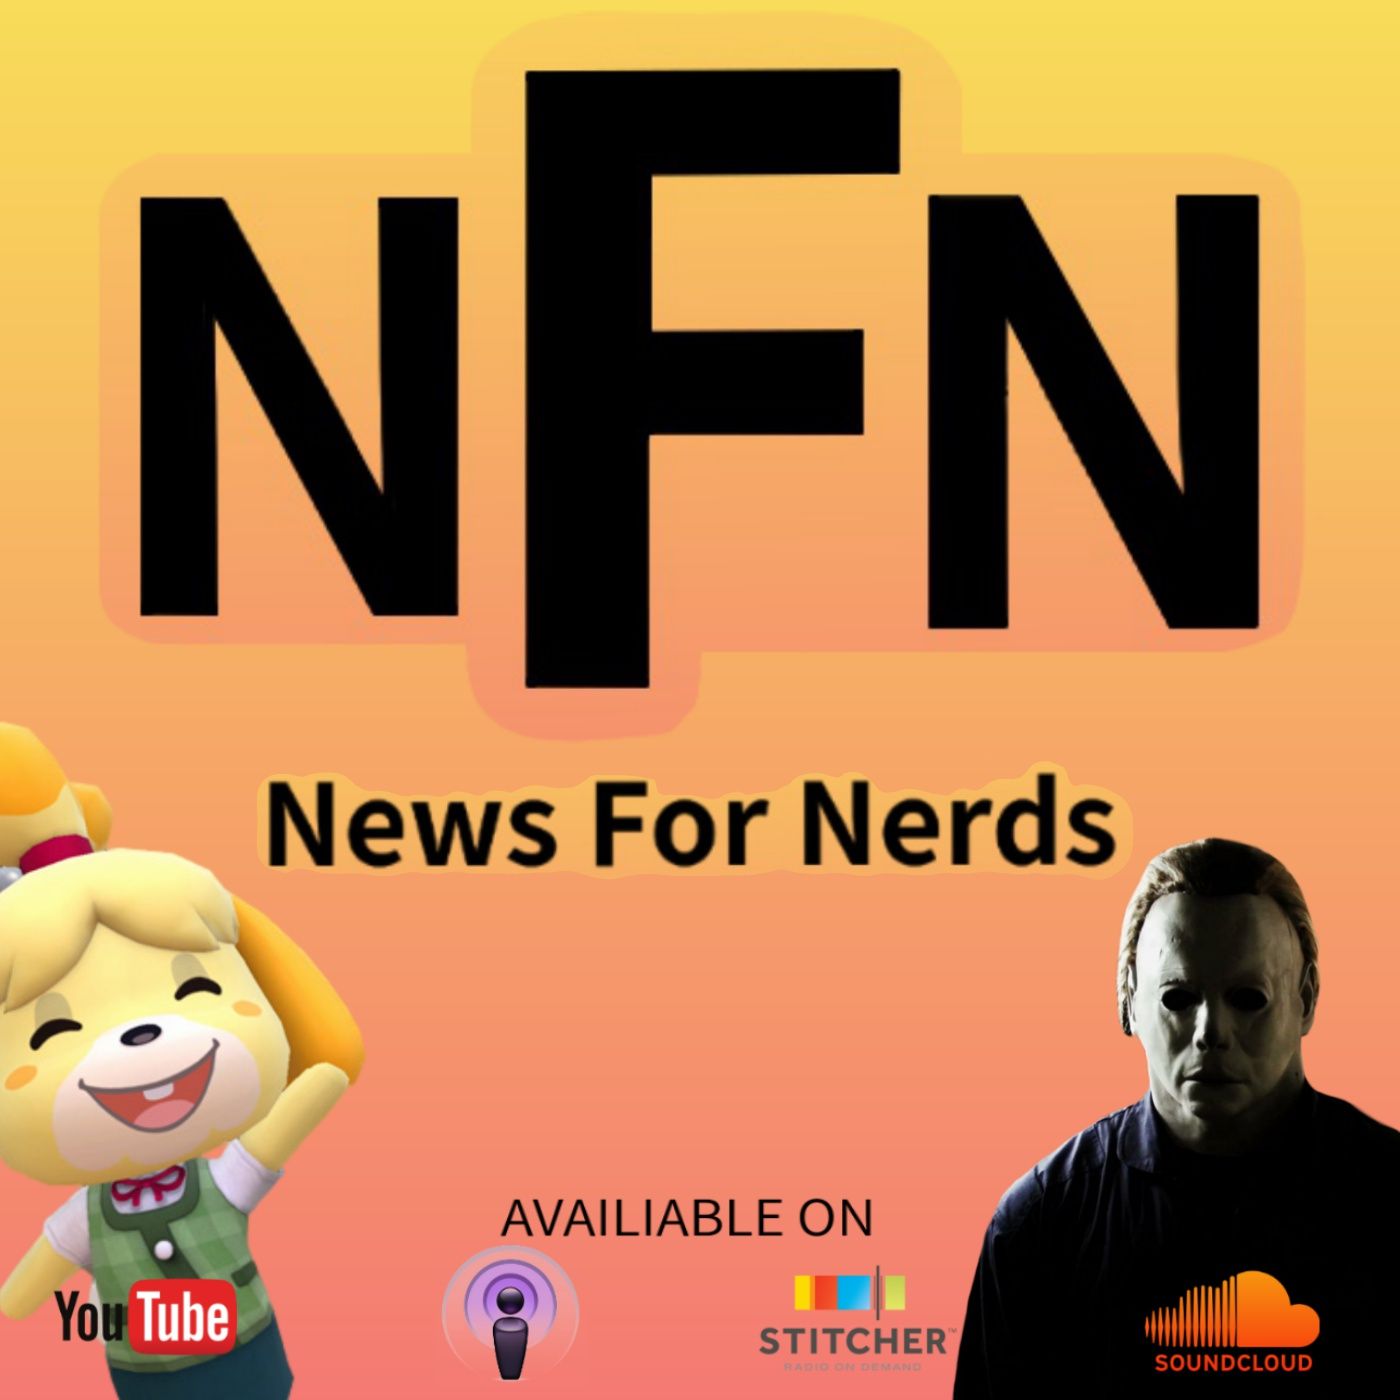 NFN episode 1 NINTENDO DIRECT and CAPTAIN MARVEL IMAGES REVEALED